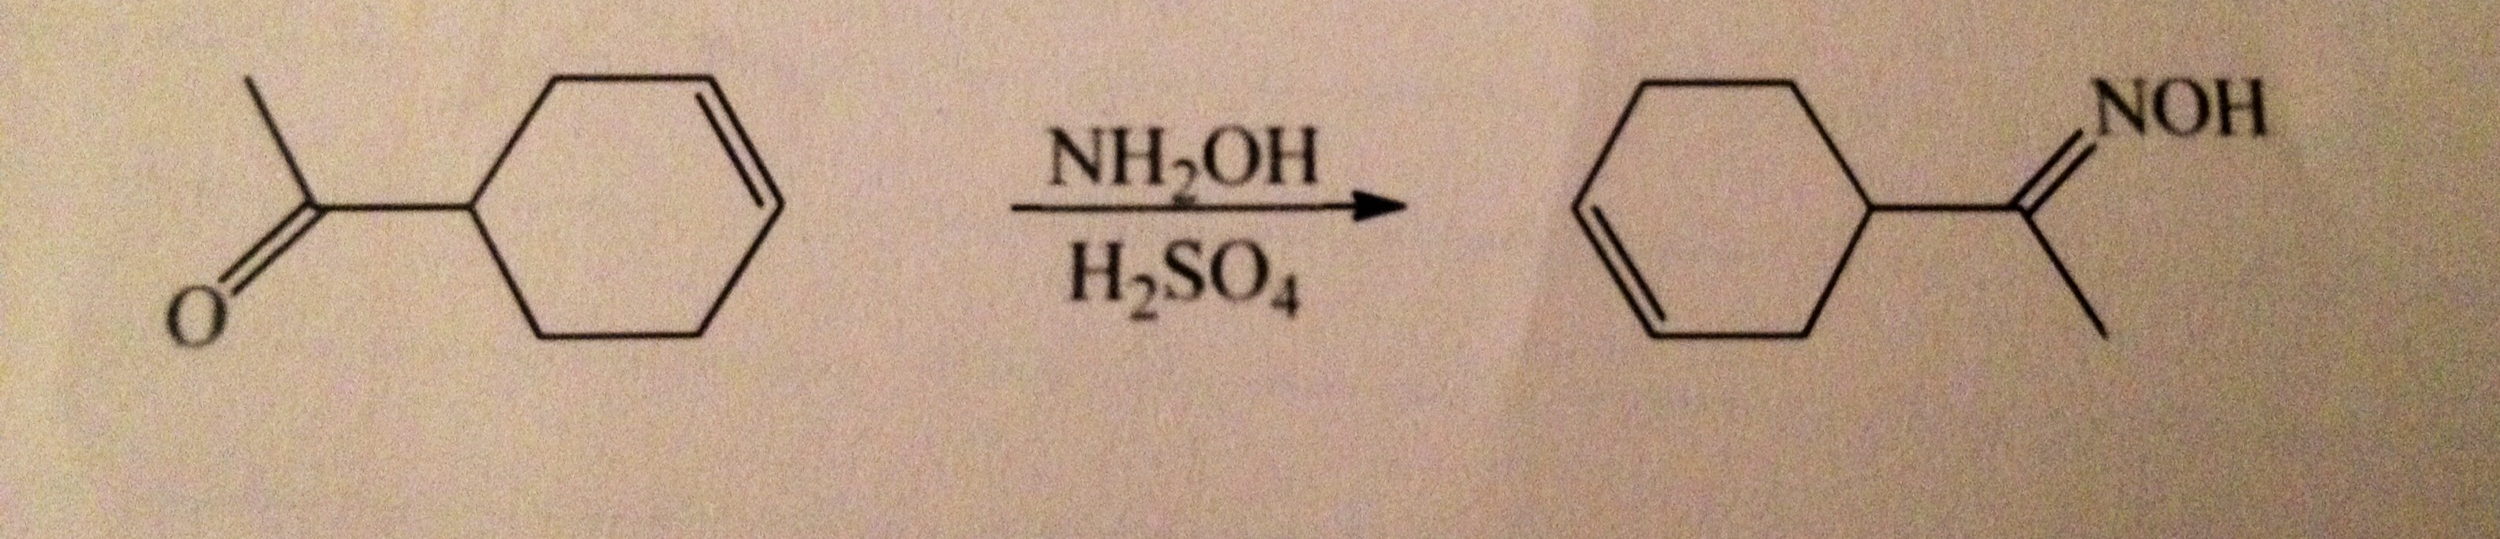 C3h7oh h2so4. Nh2 это в химии. Nh2oh HCL. H2noh название. Пропаналь + h2noh.